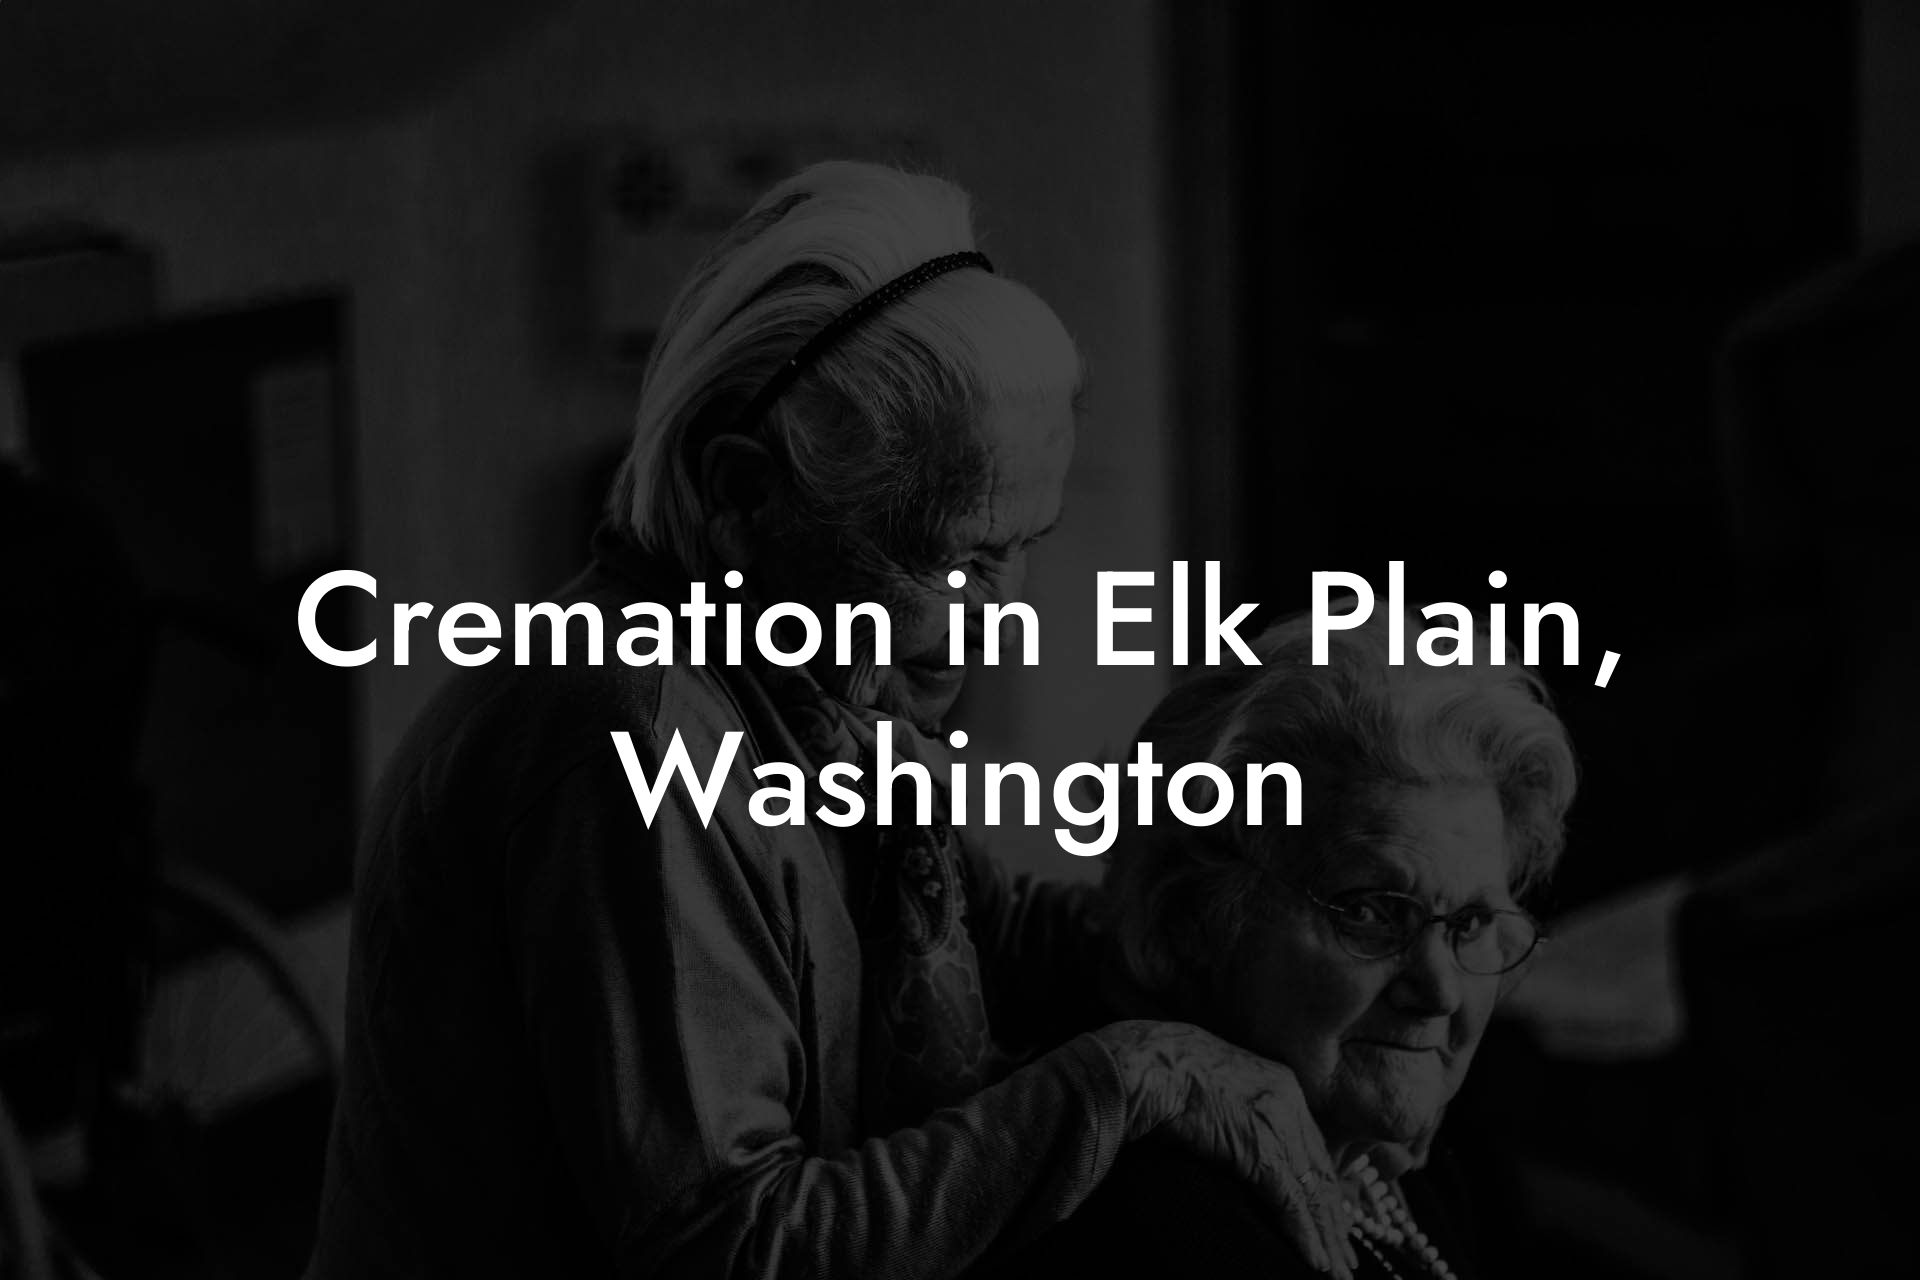 Cremation in Elk Plain, Washington